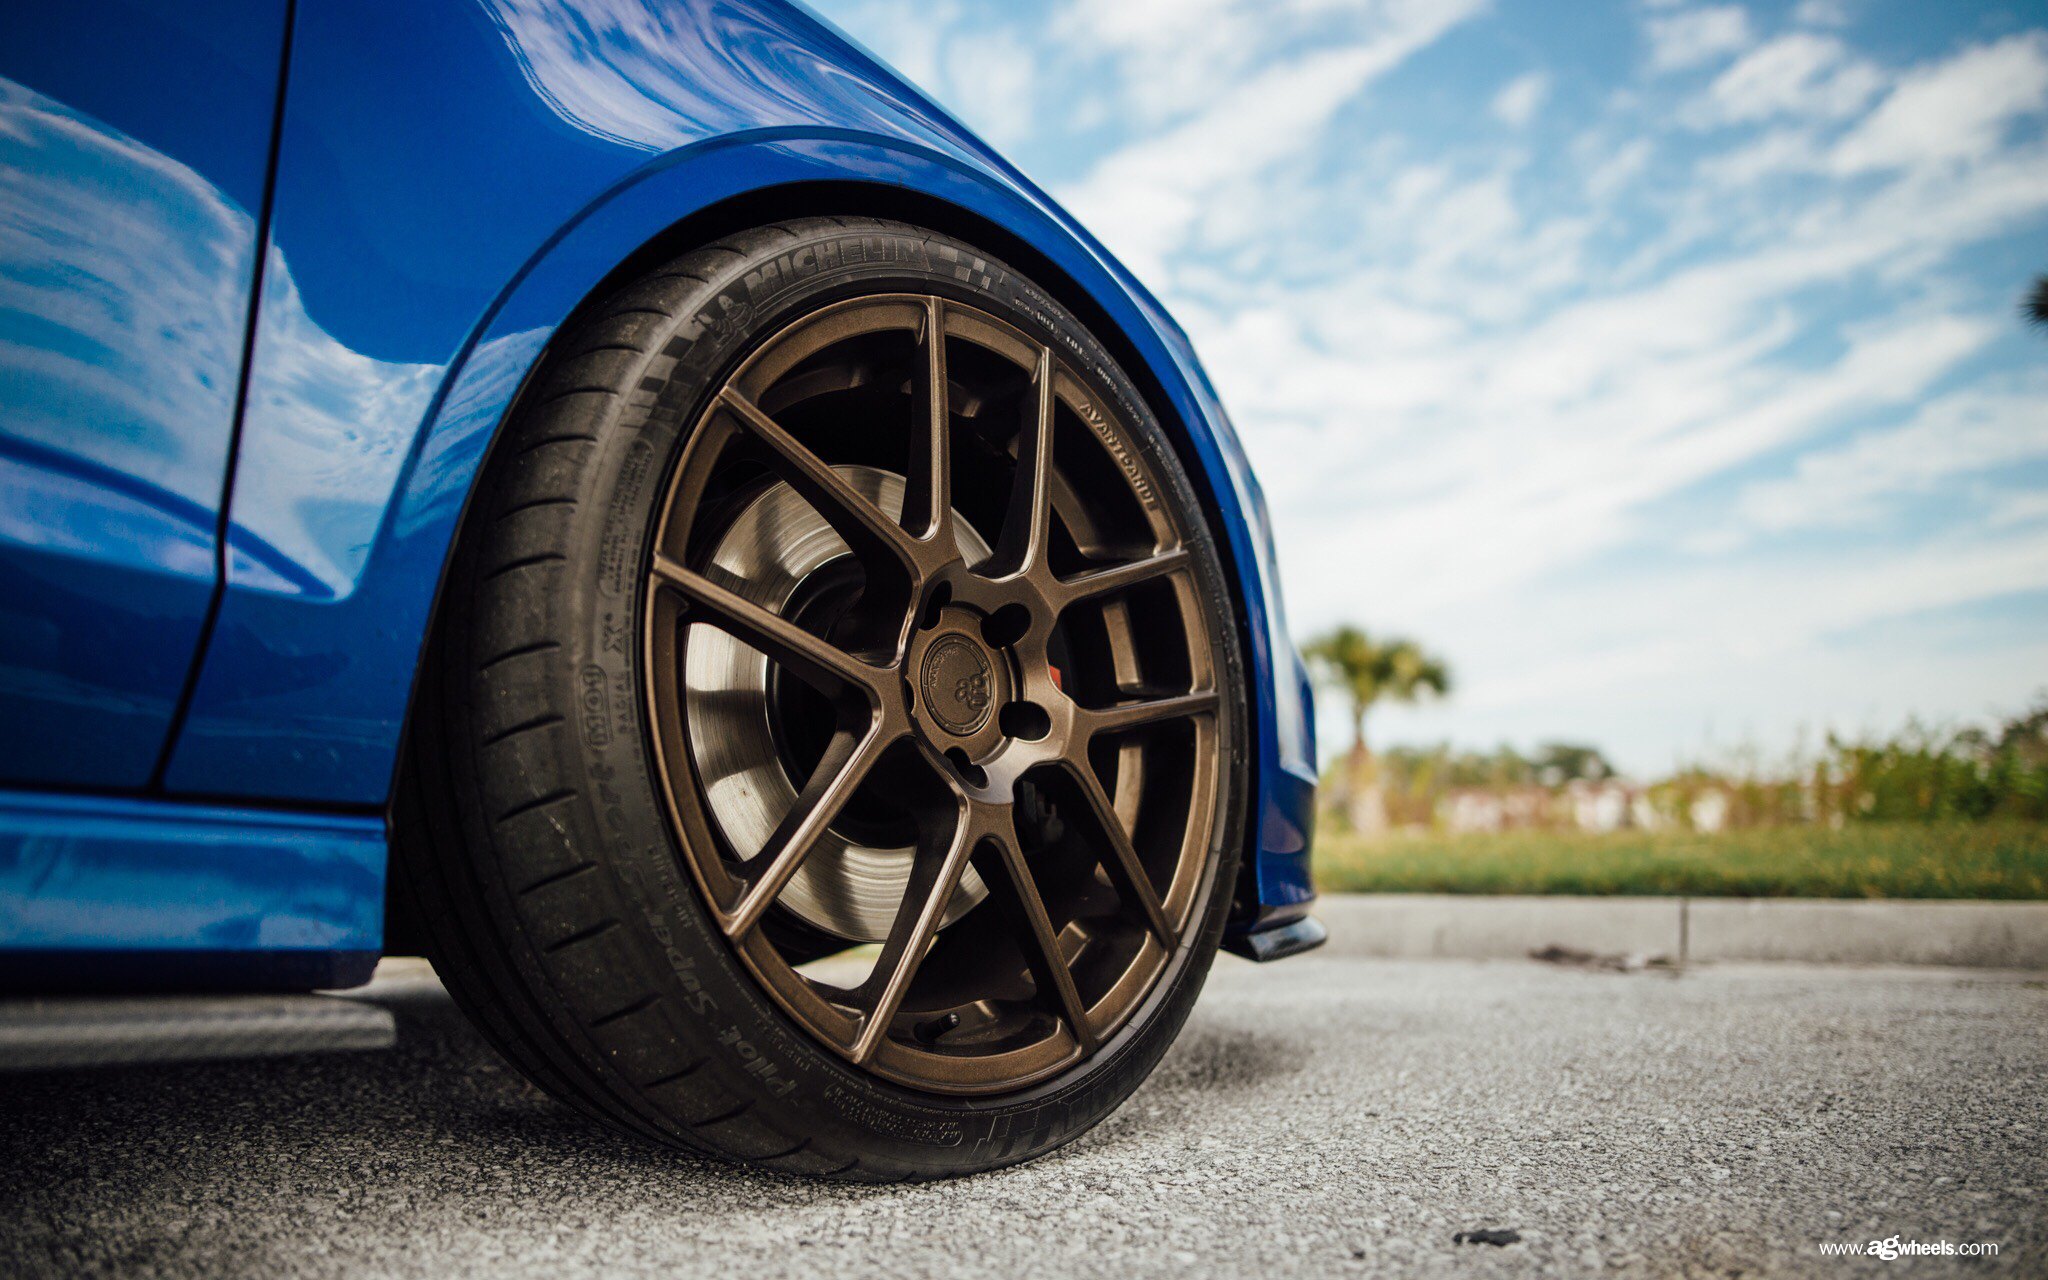 Carbon Fiber Side Skirts on Blue Audi A3 - Photo by Avant Garde Wheels